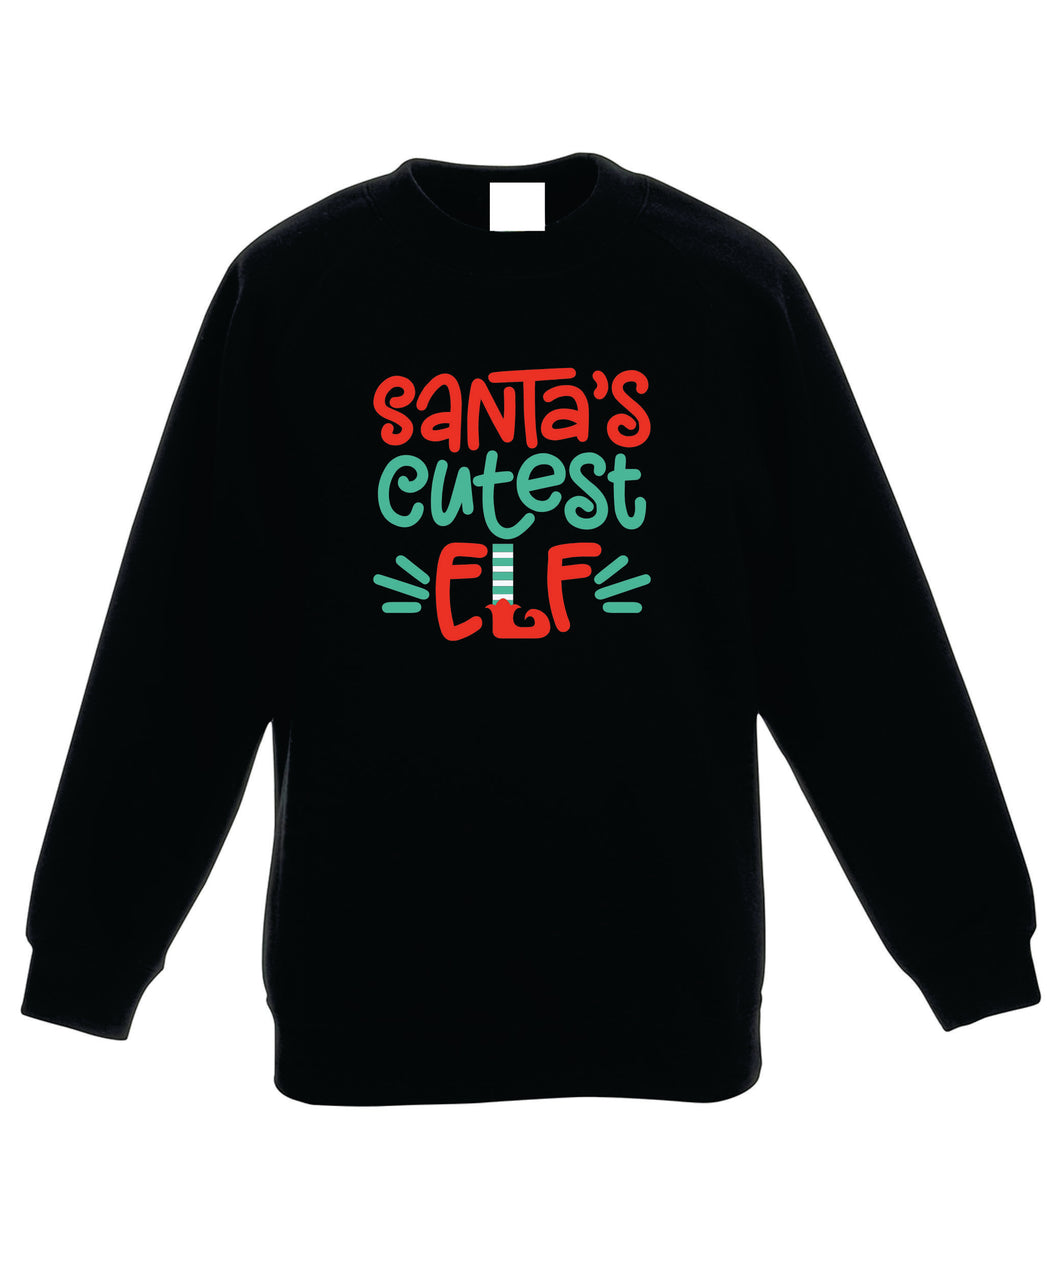 Kids Christmas Sweatshirt (Santa's Cutest Elf)